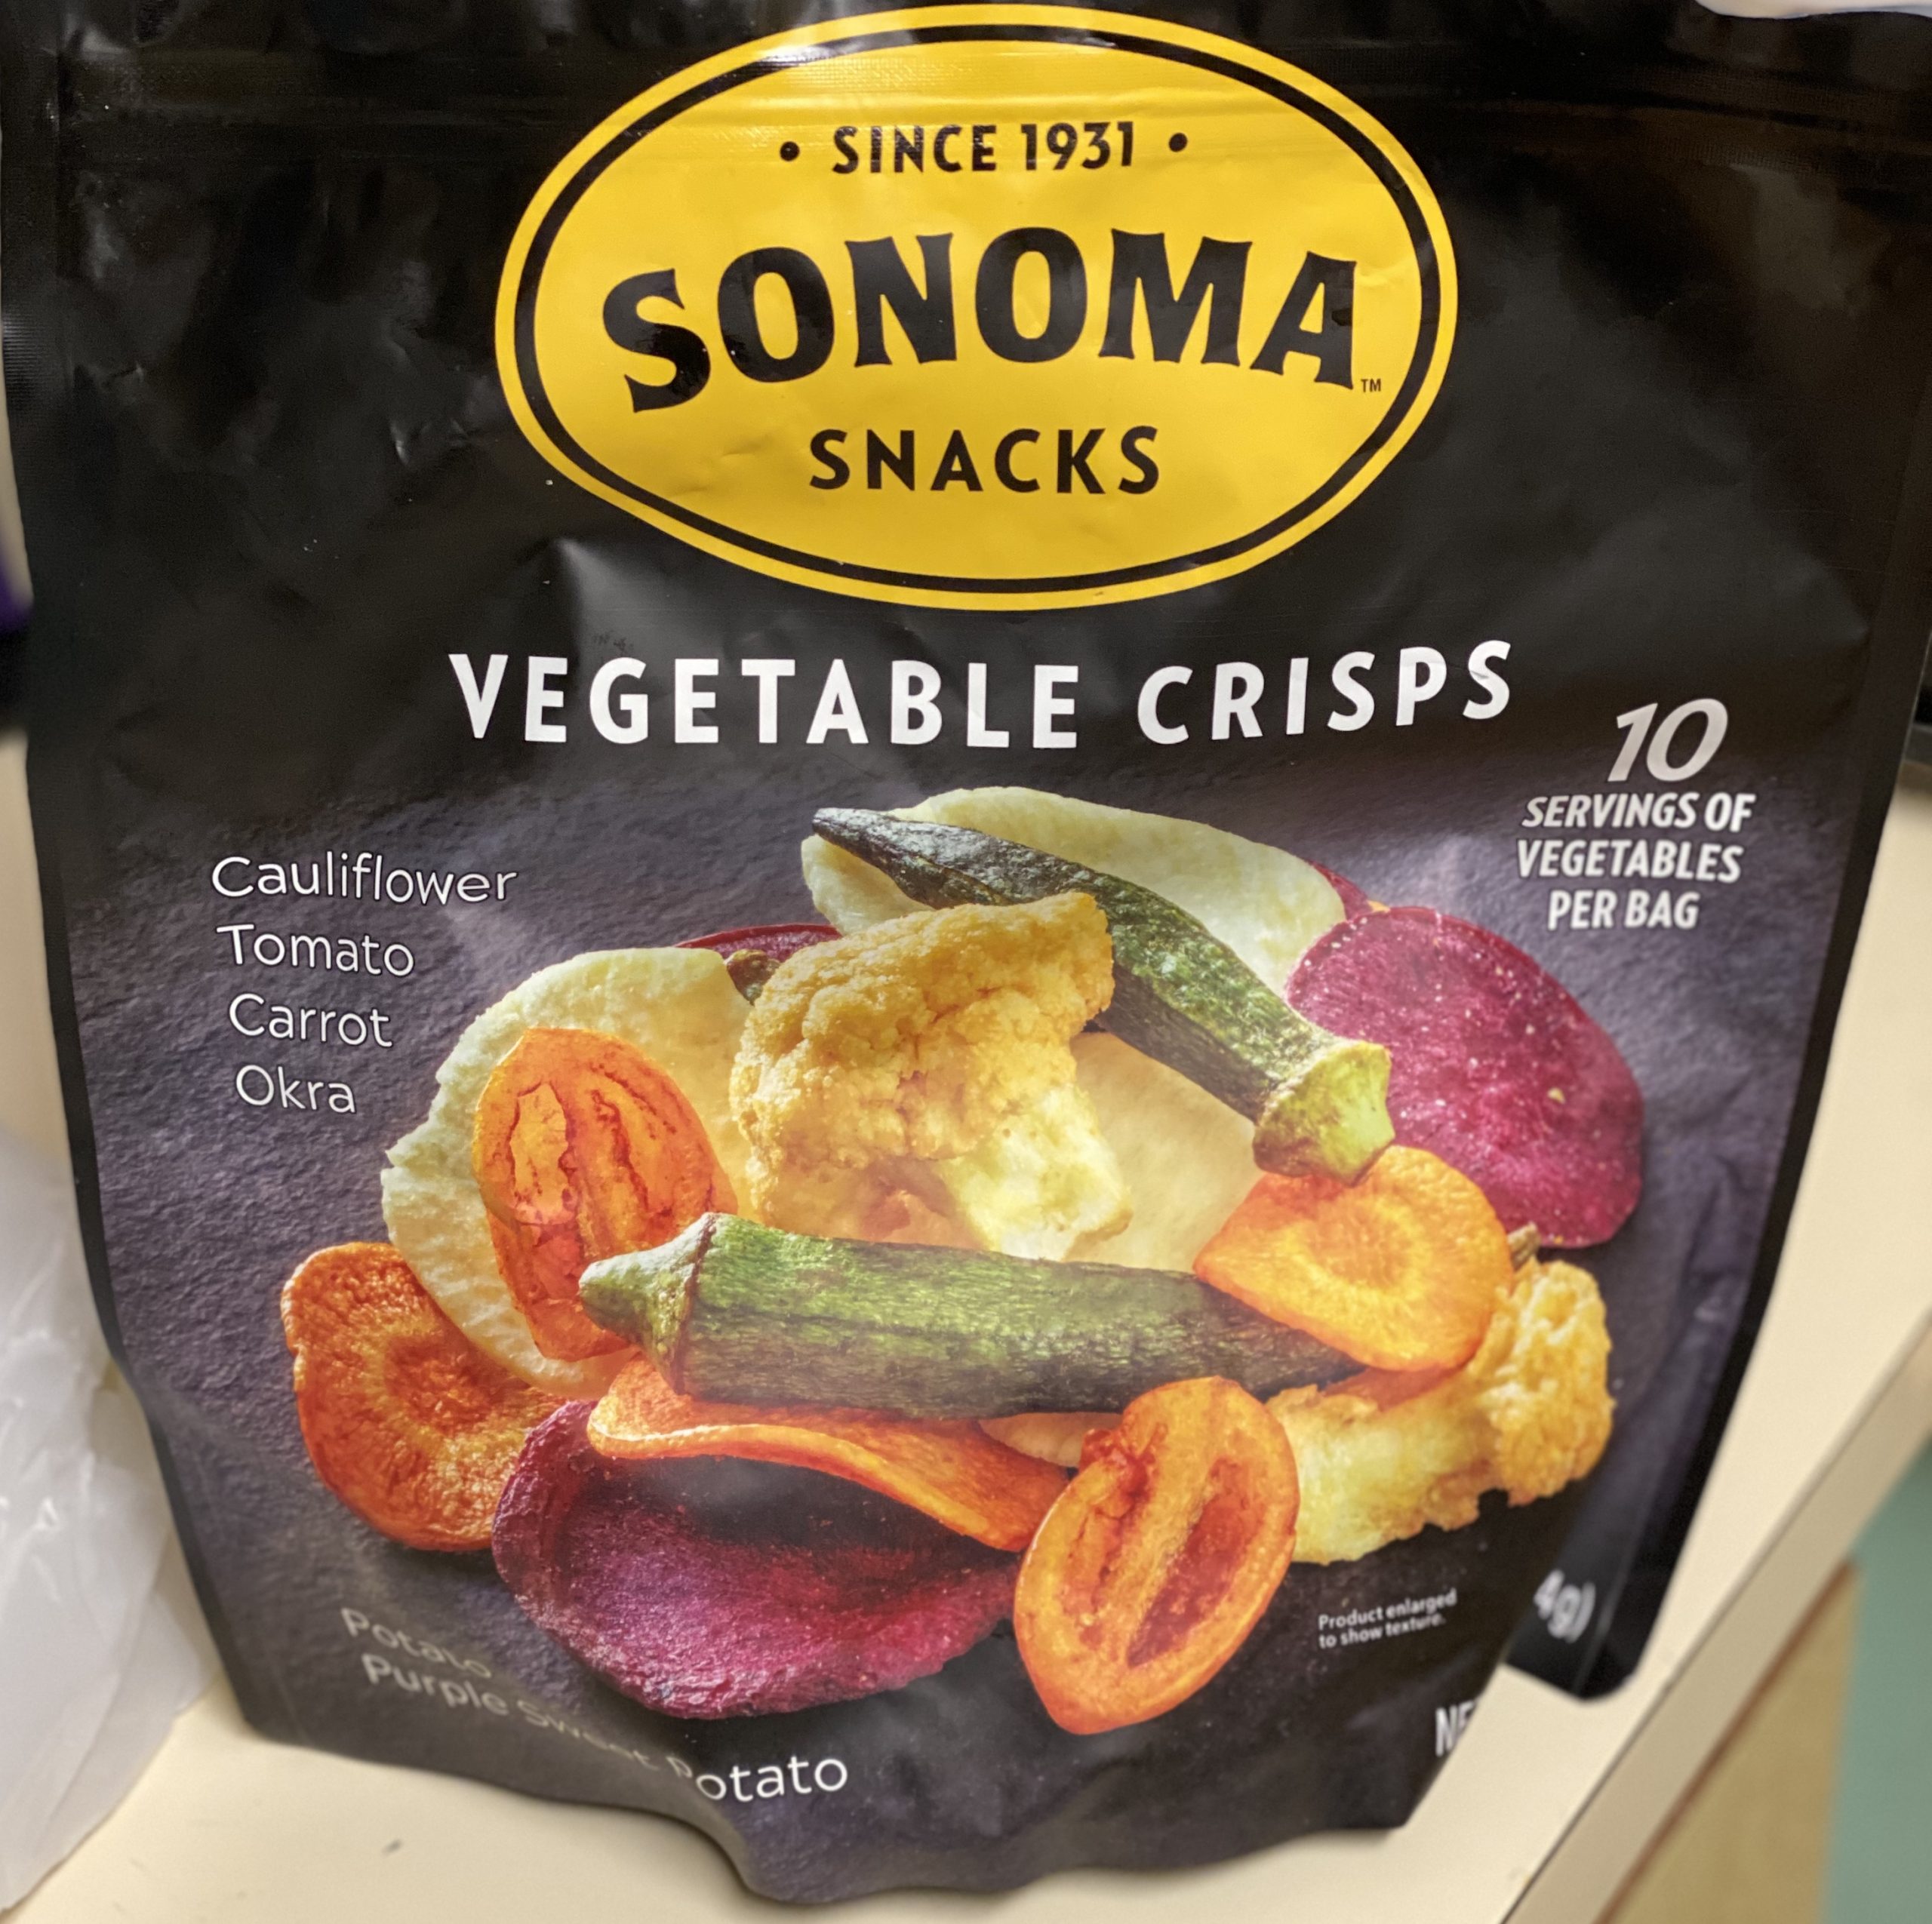 Sonoma Vegetable Crisps from Costco